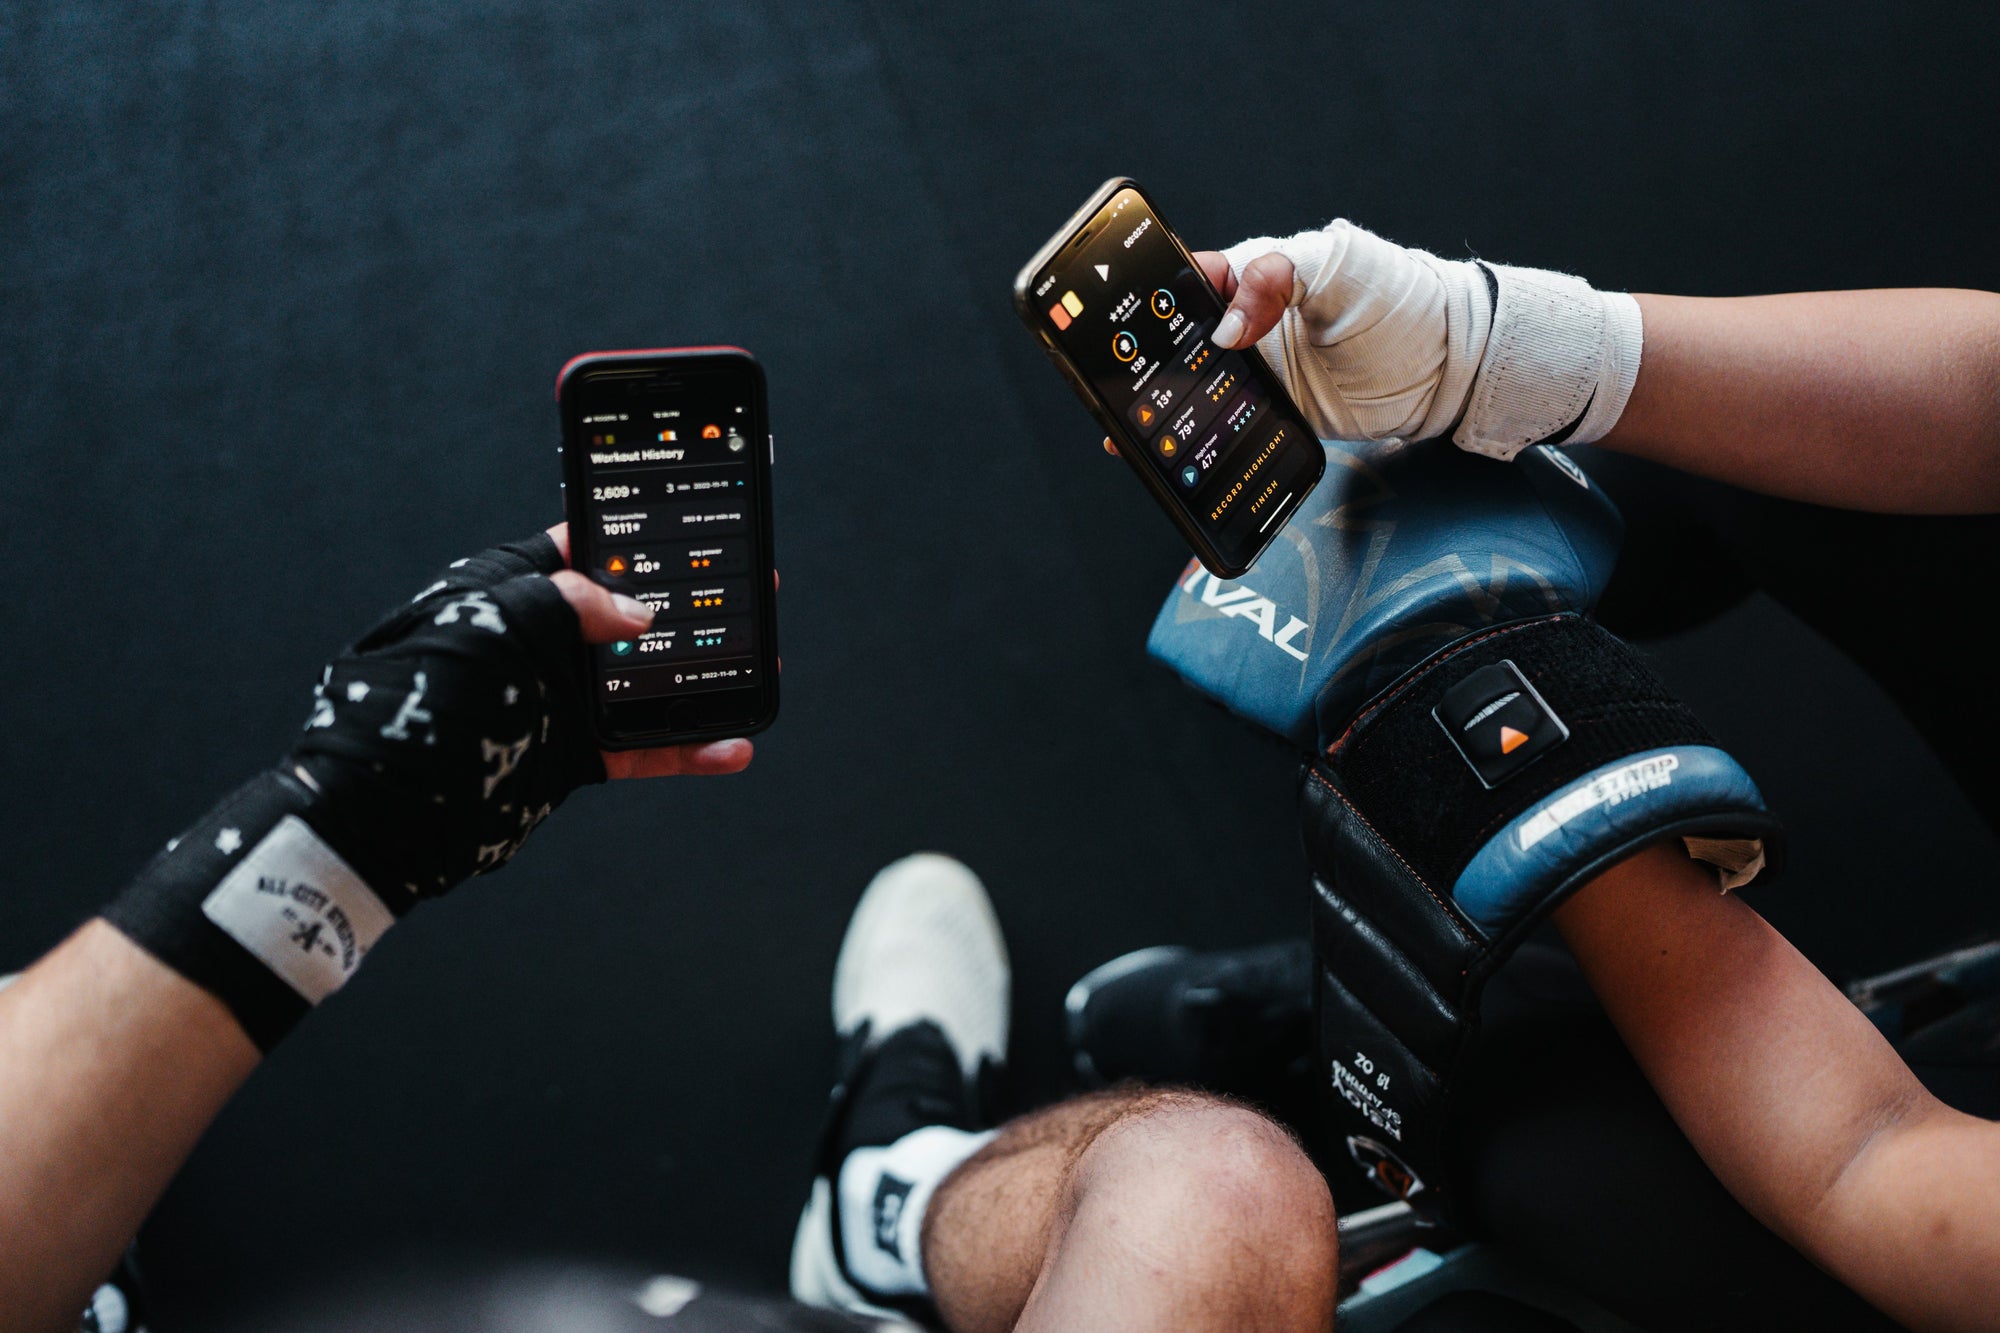 POWA Boxing Phone Application and Sensors on Wrists 